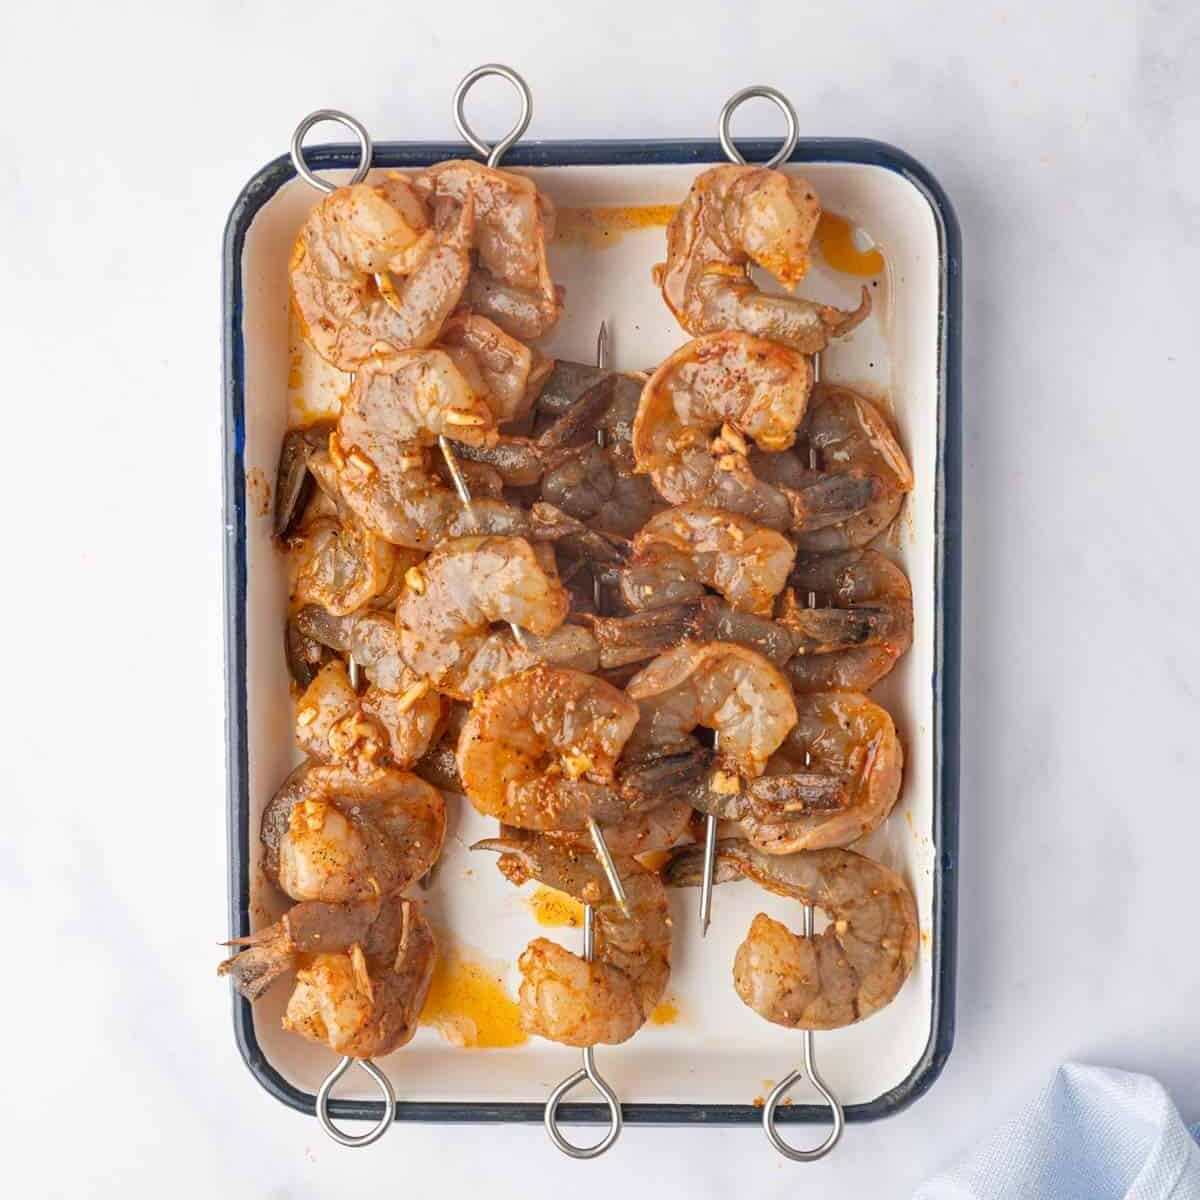 Marinated shrimp are threaded onto skewers.